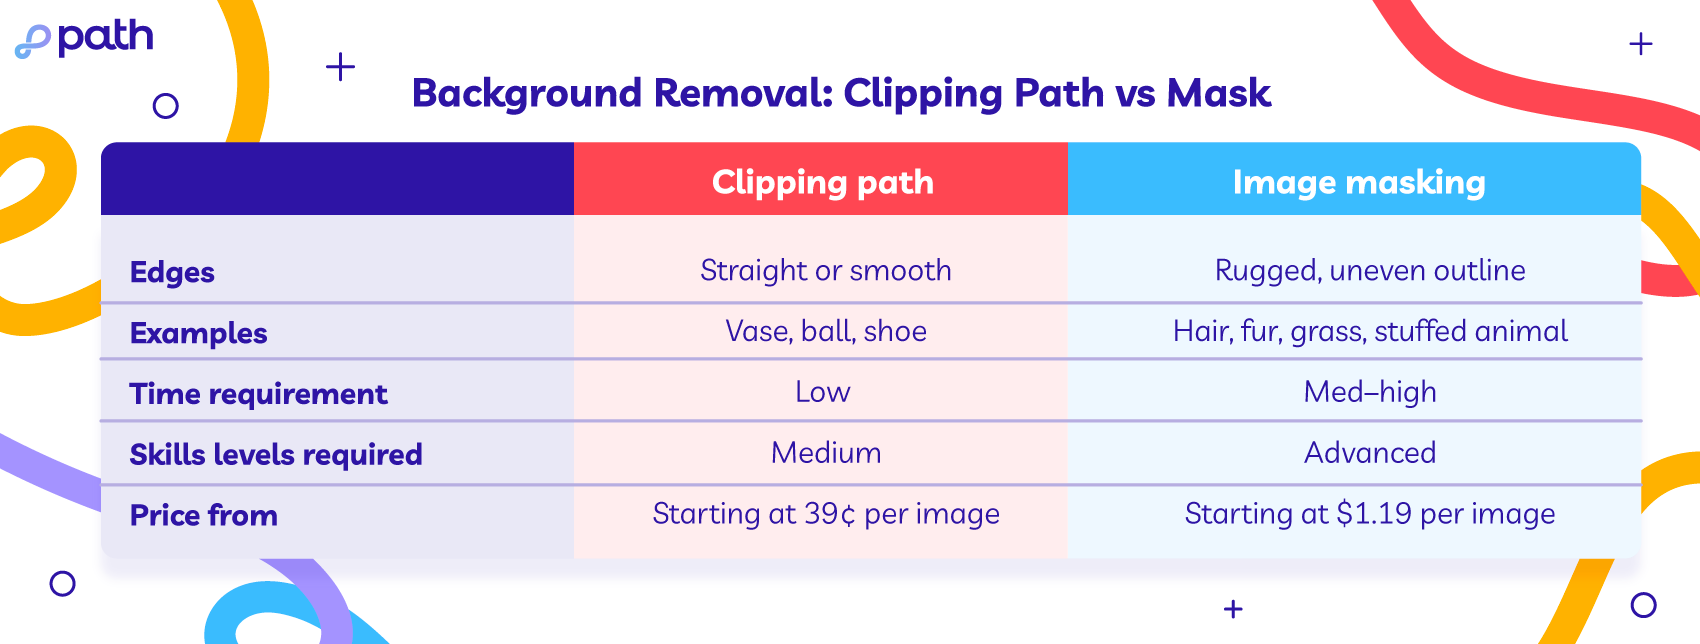 clipping path image masking